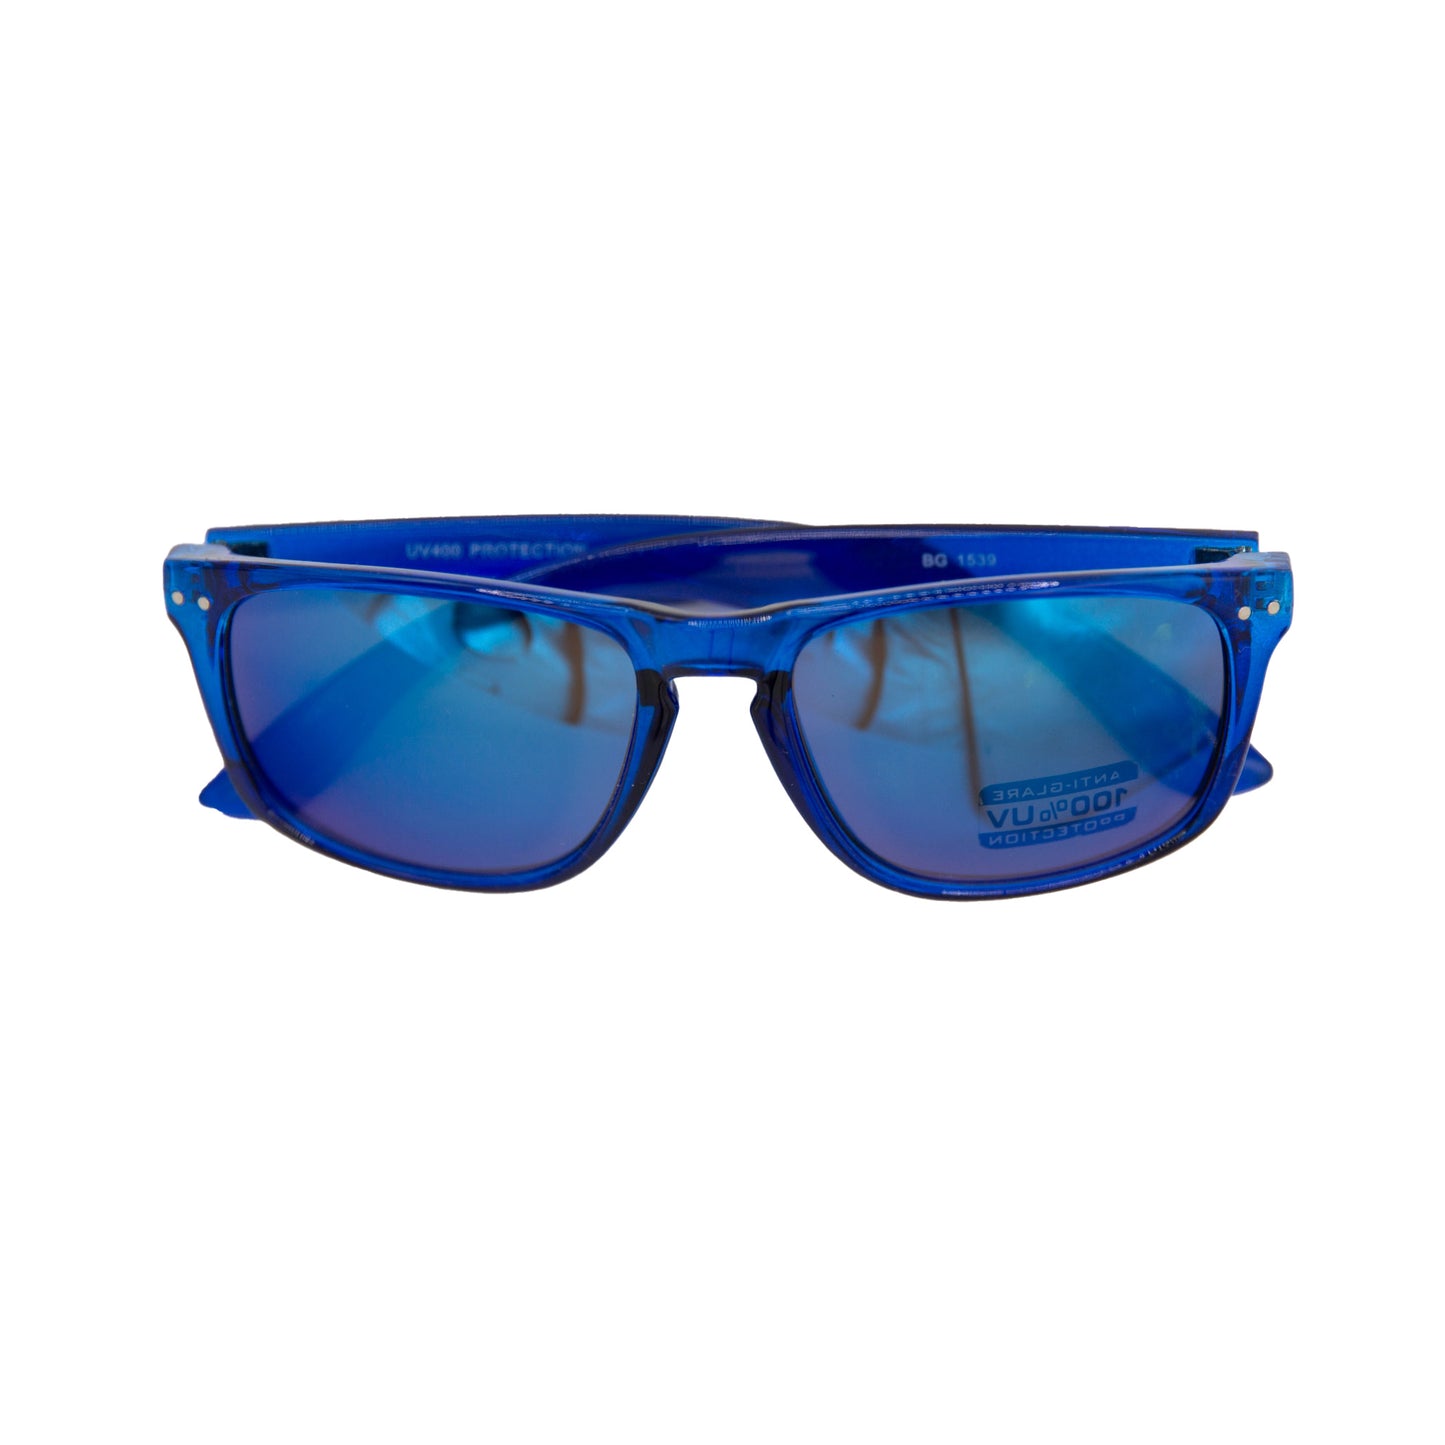 Blue Gem Adult Sunglasses Wayfarer - Clear Blue with Blue Lenses